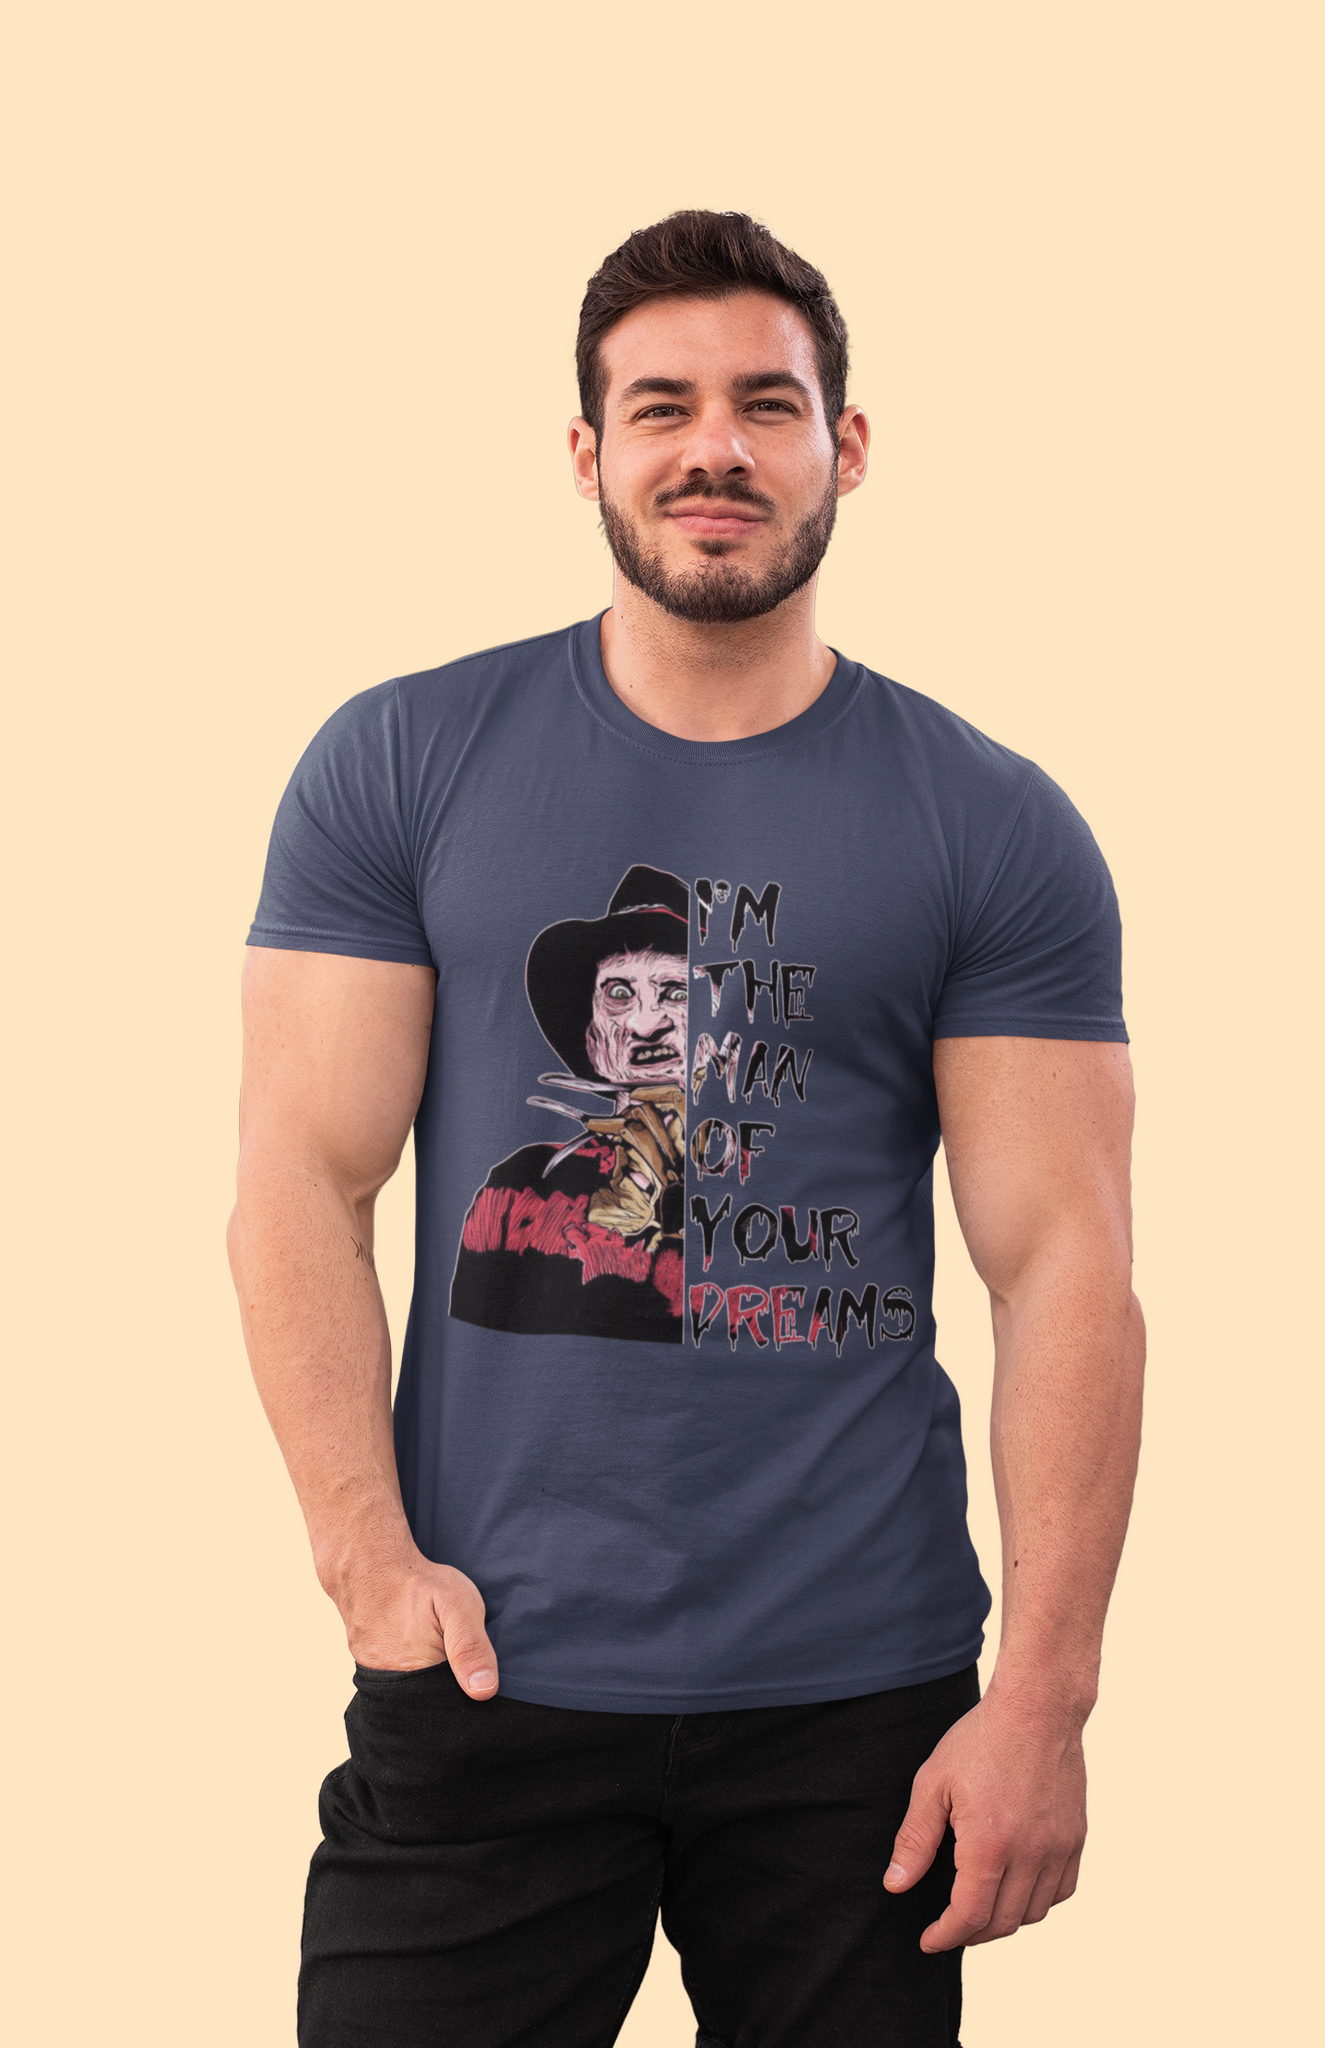 Nightmare On Elm Street T Shirt, Im The Man Of Your Dreams Tshirt, Freddy Krueger T Shirt, Halloween Gifts